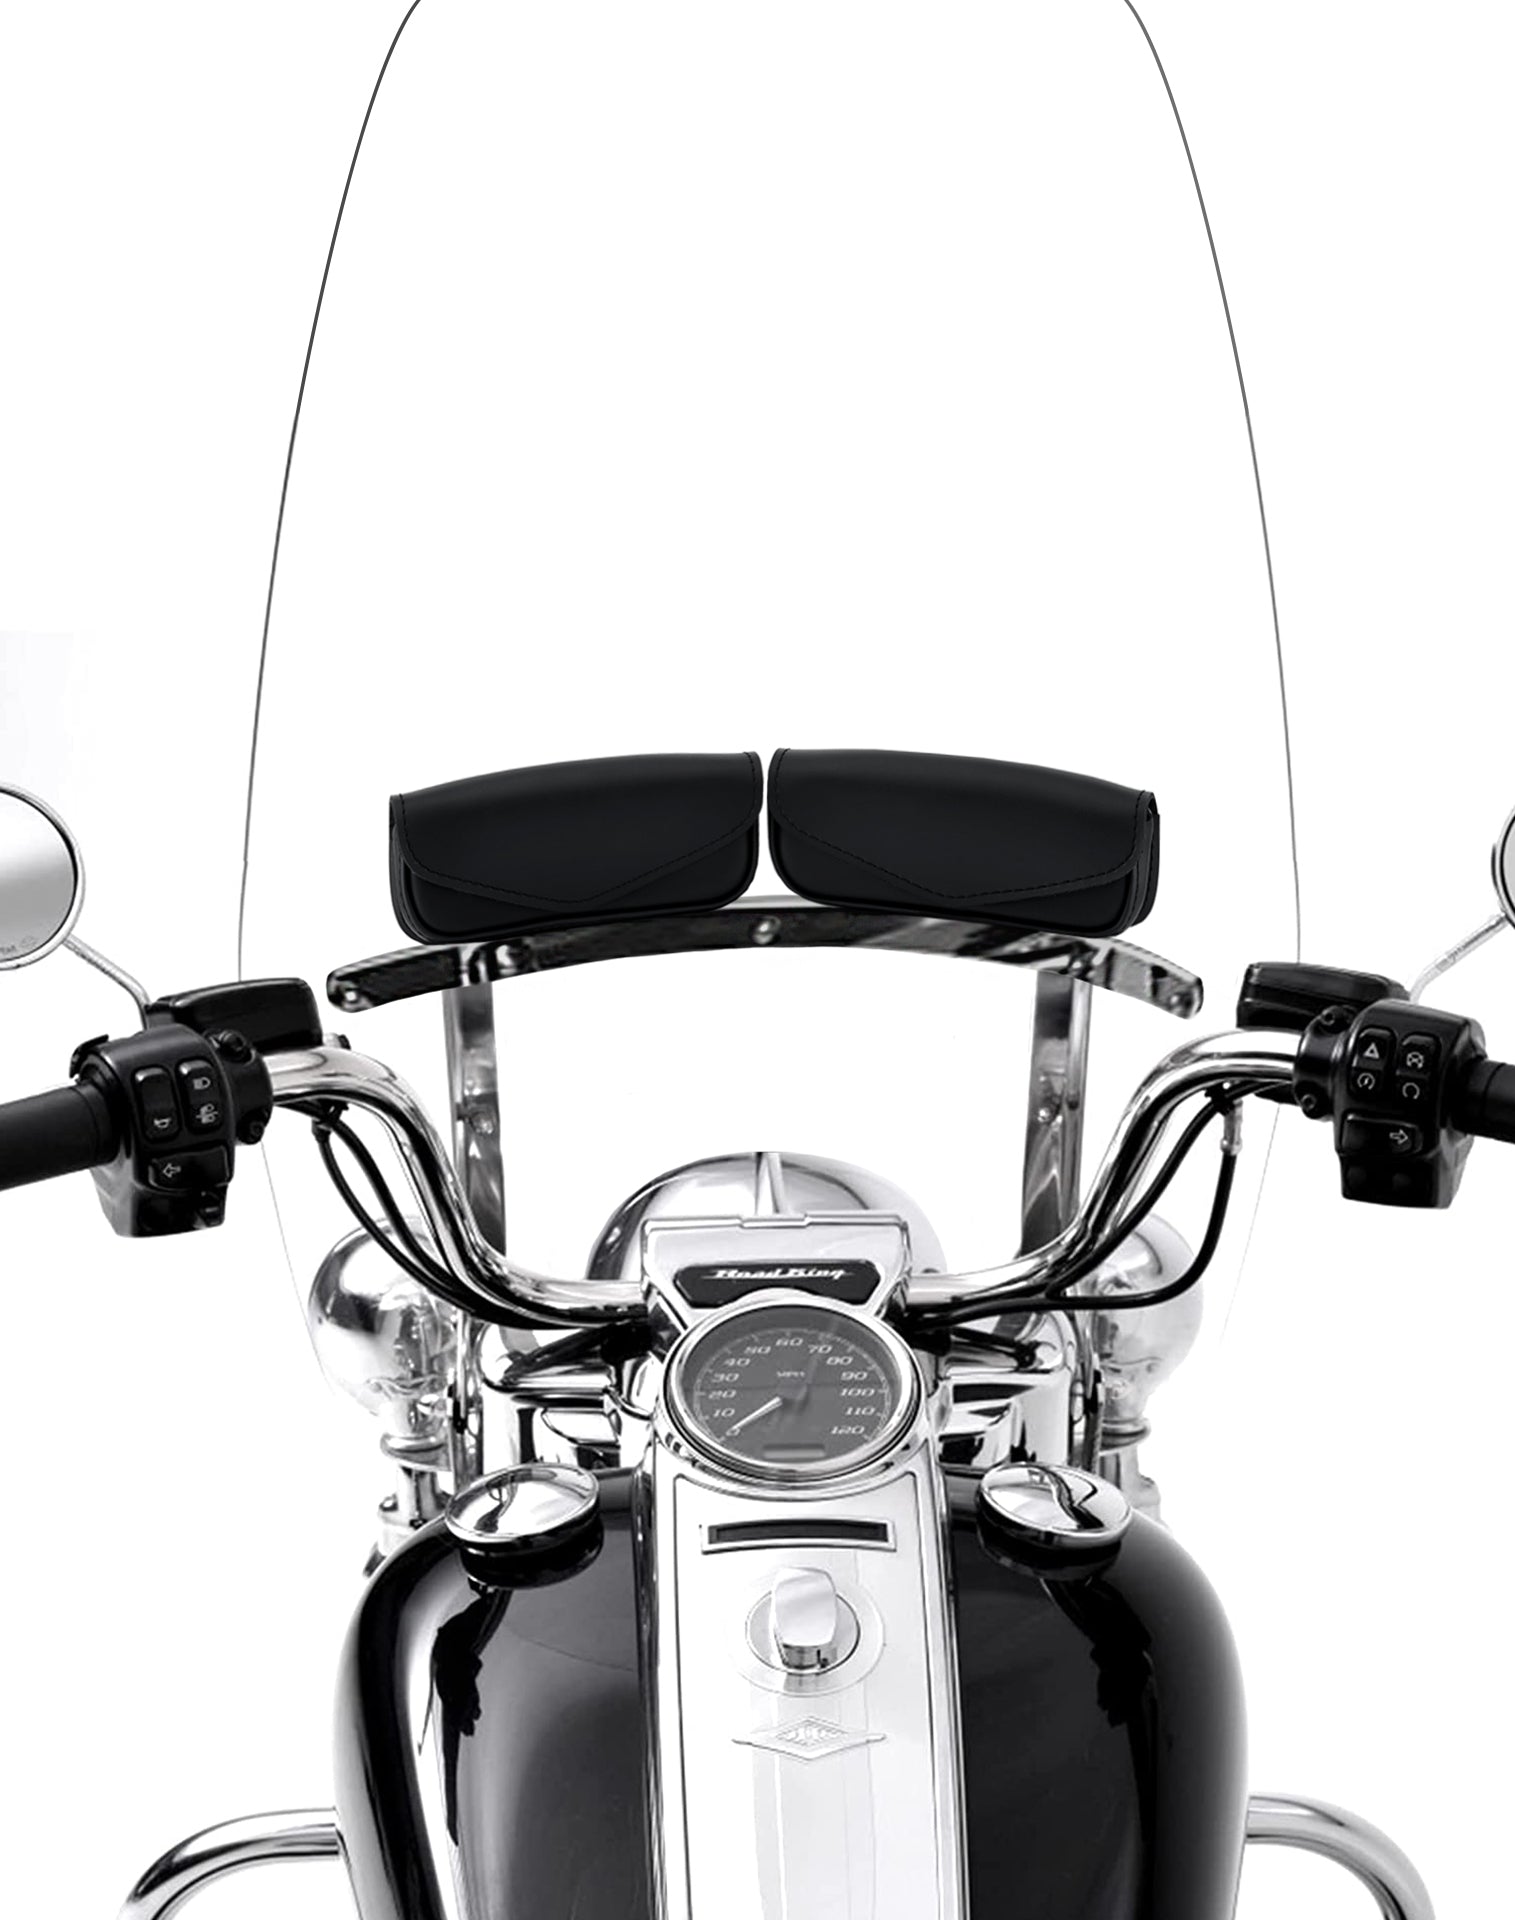 Viking Revival 2-Pocket Motorcycle Windshield Bag for Harley Touring Close Up View